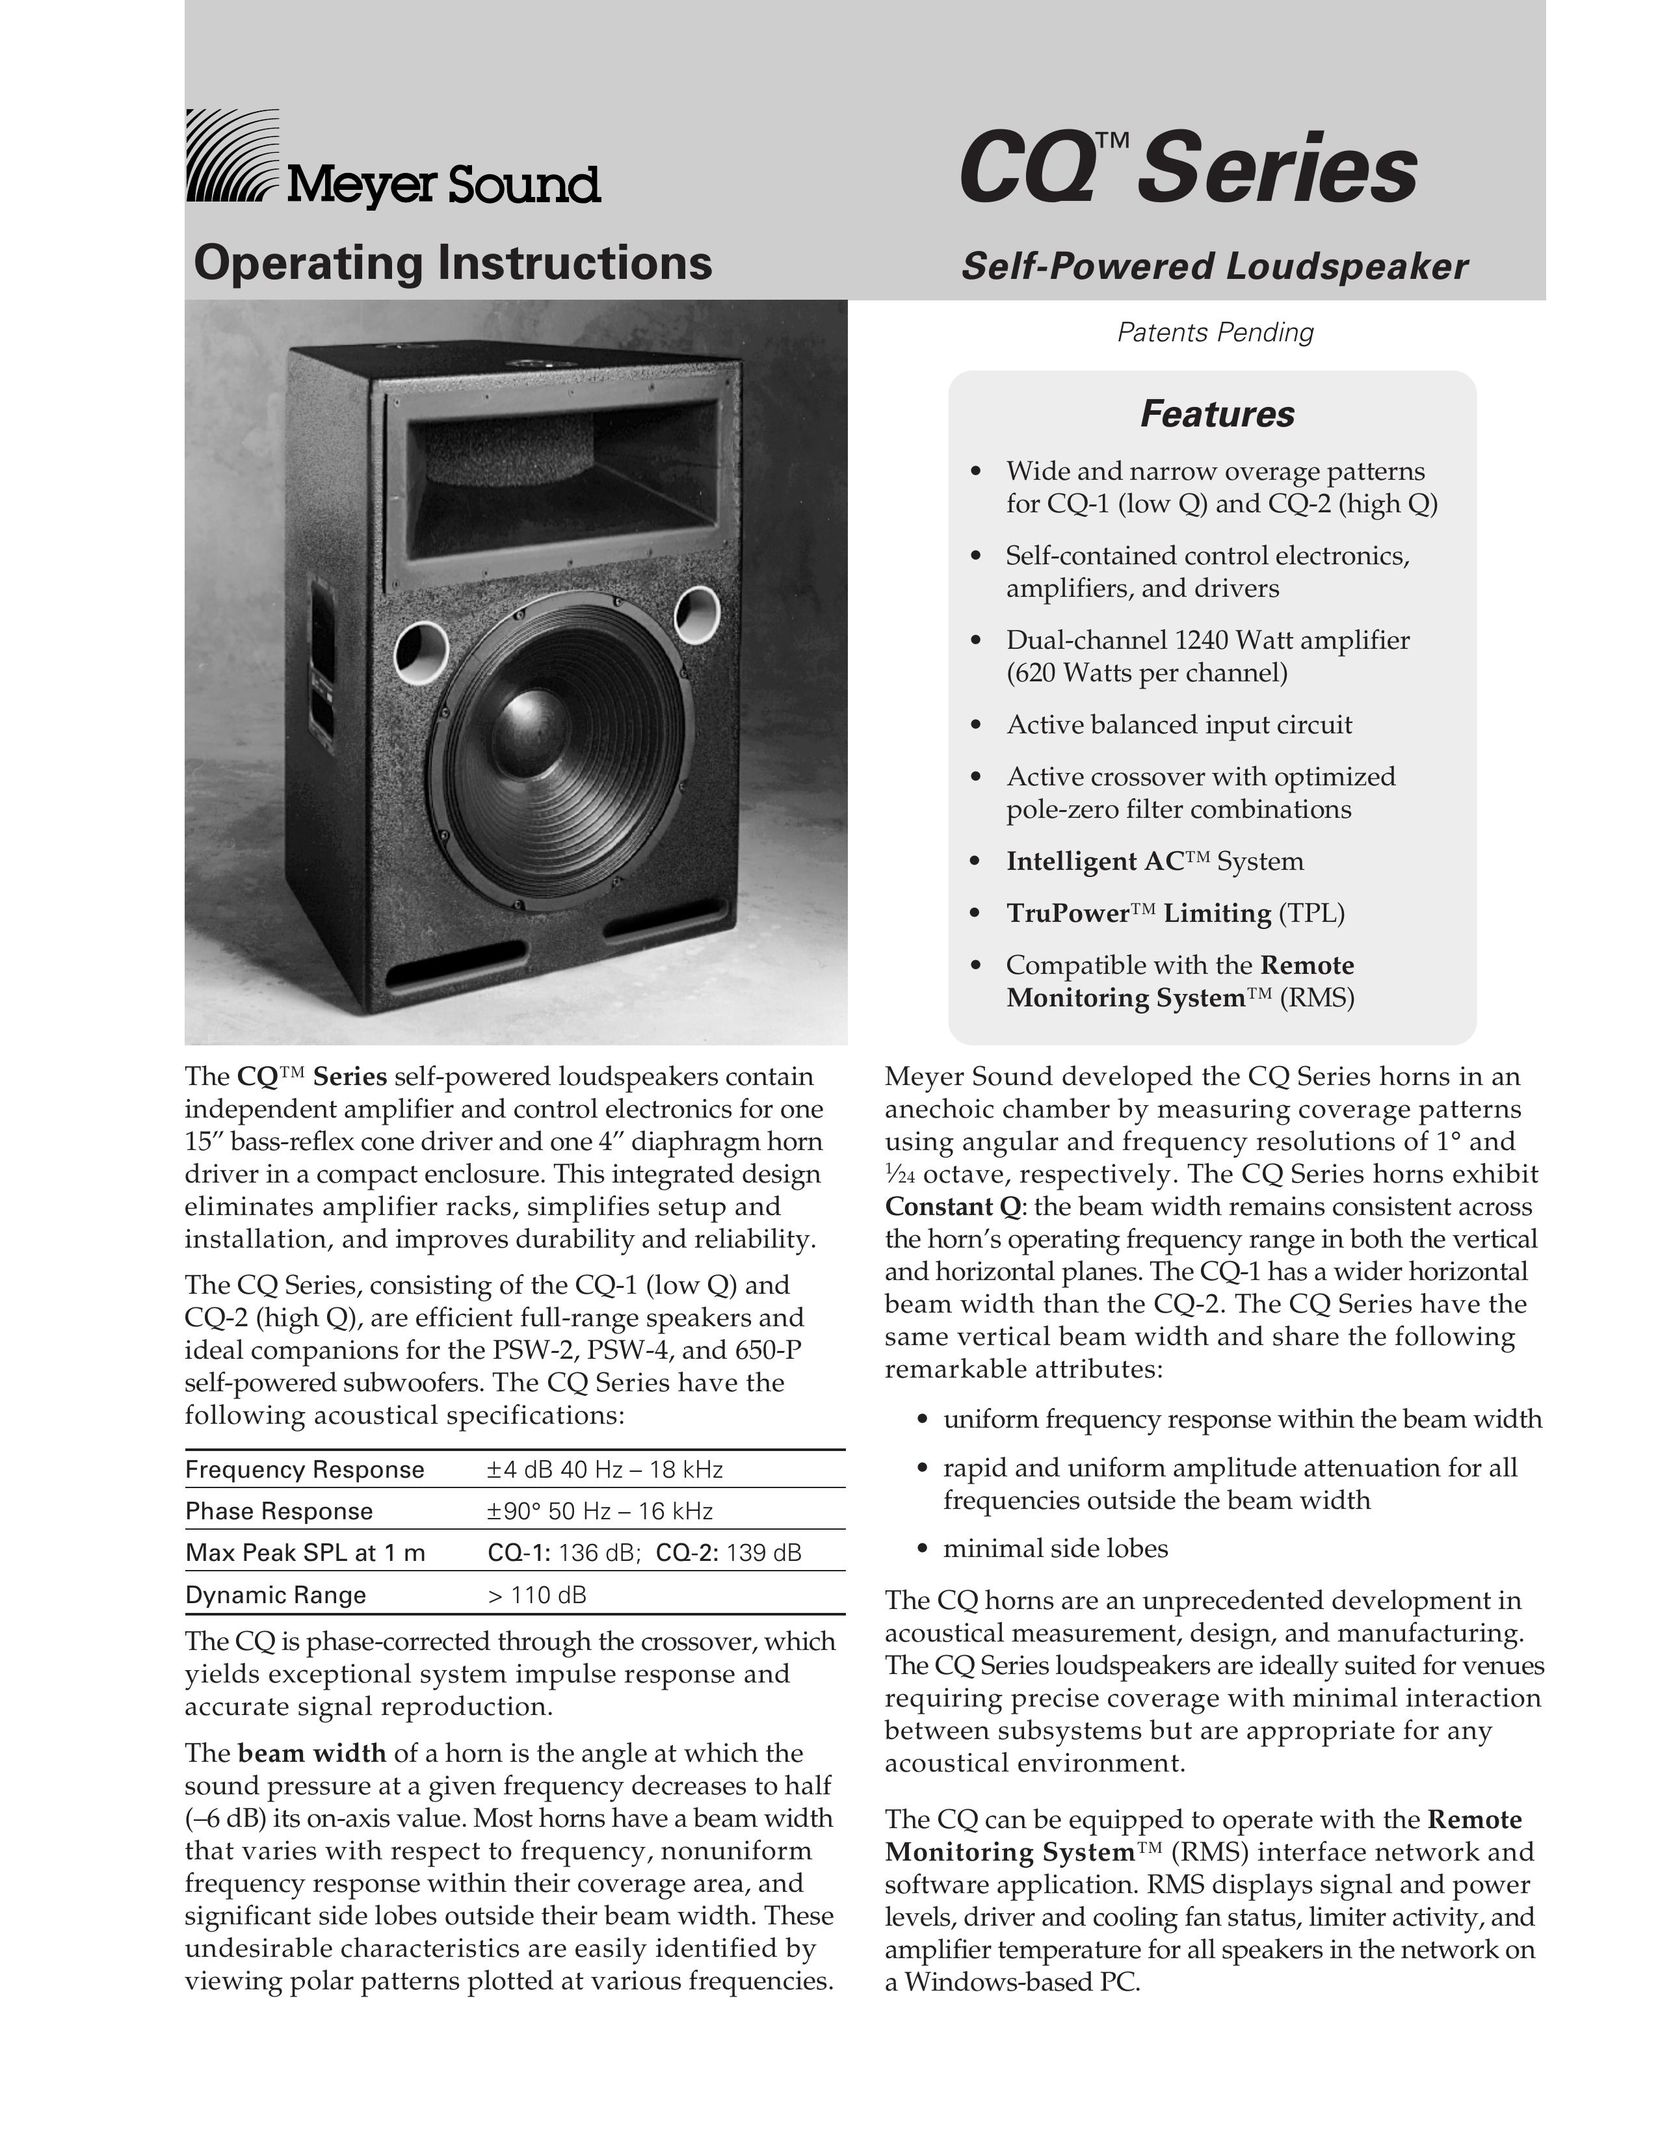 Meyer Sound CQTM Series Speaker User Manual